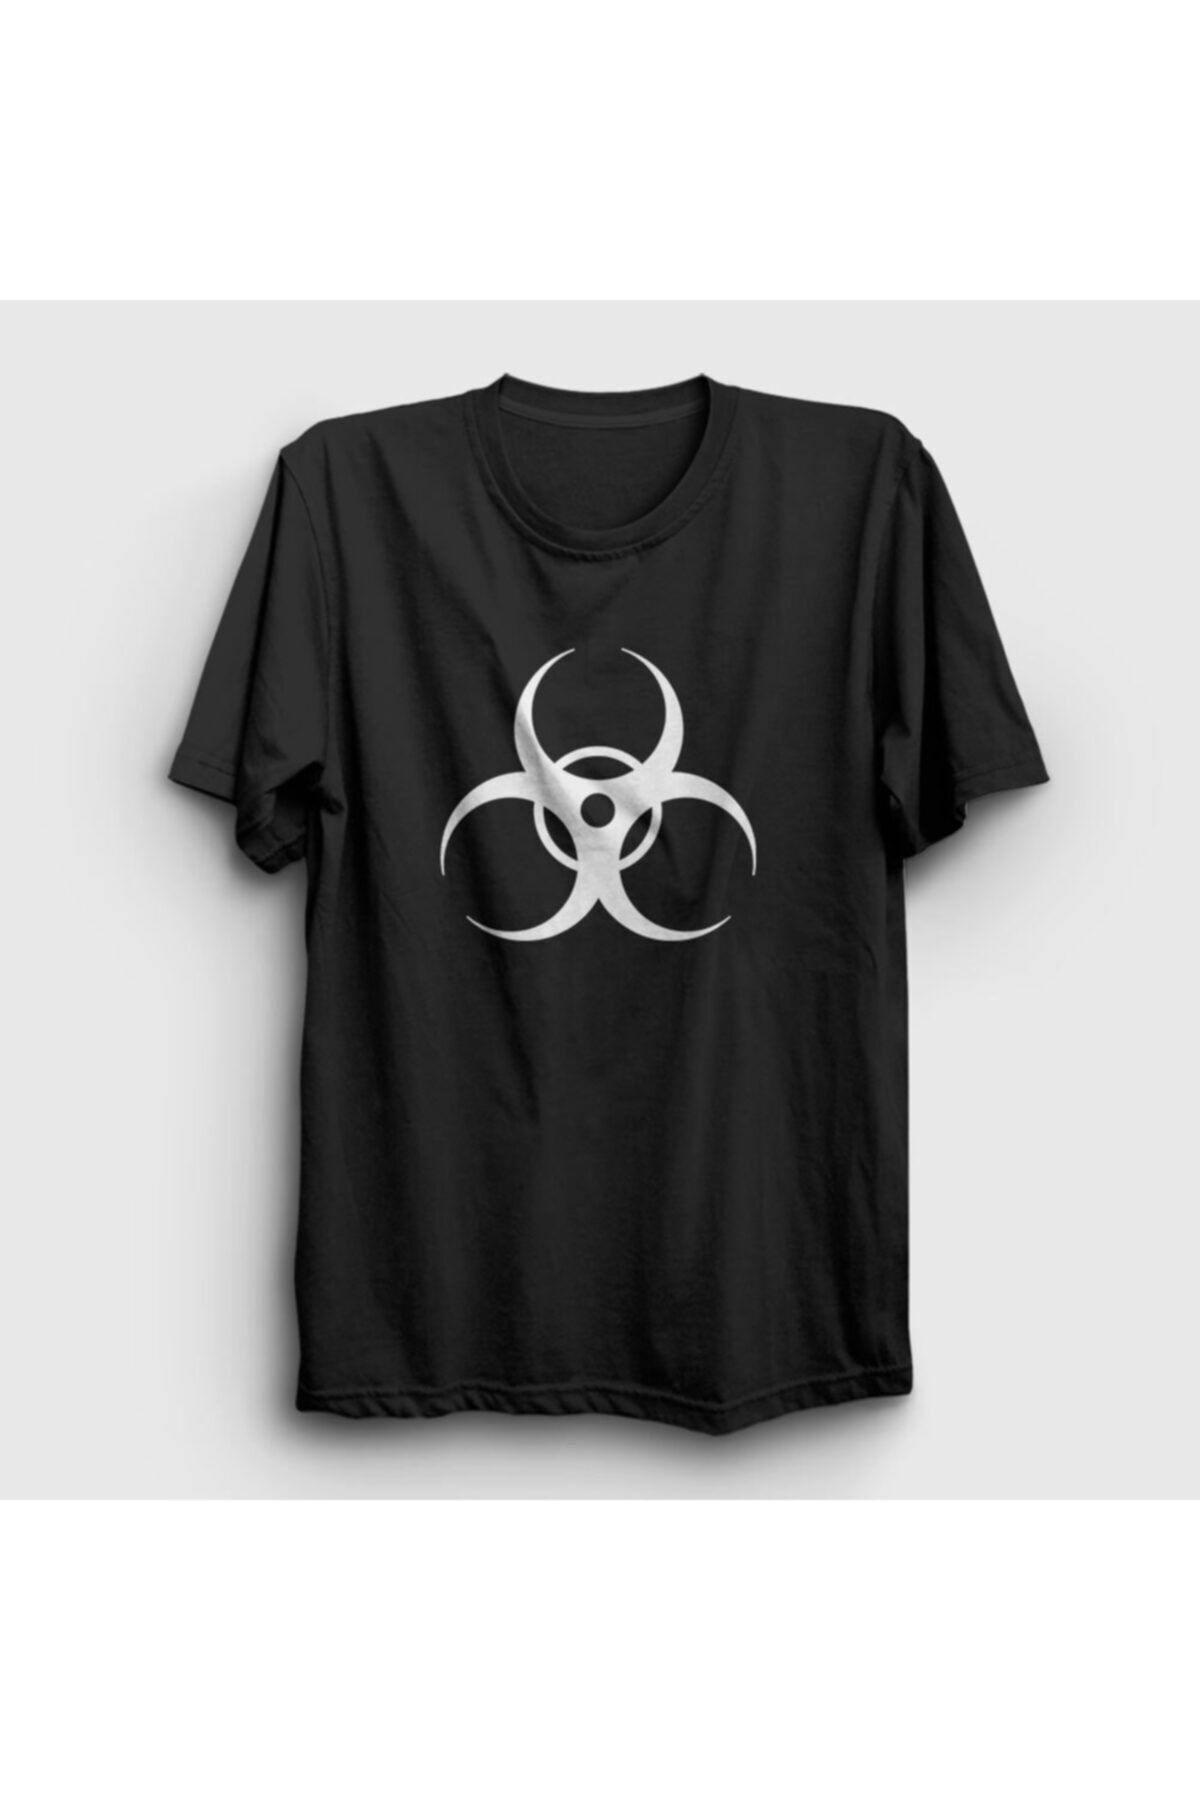 Tisort.ist Unisex Siyah Biohazard T-shirt 101499tt